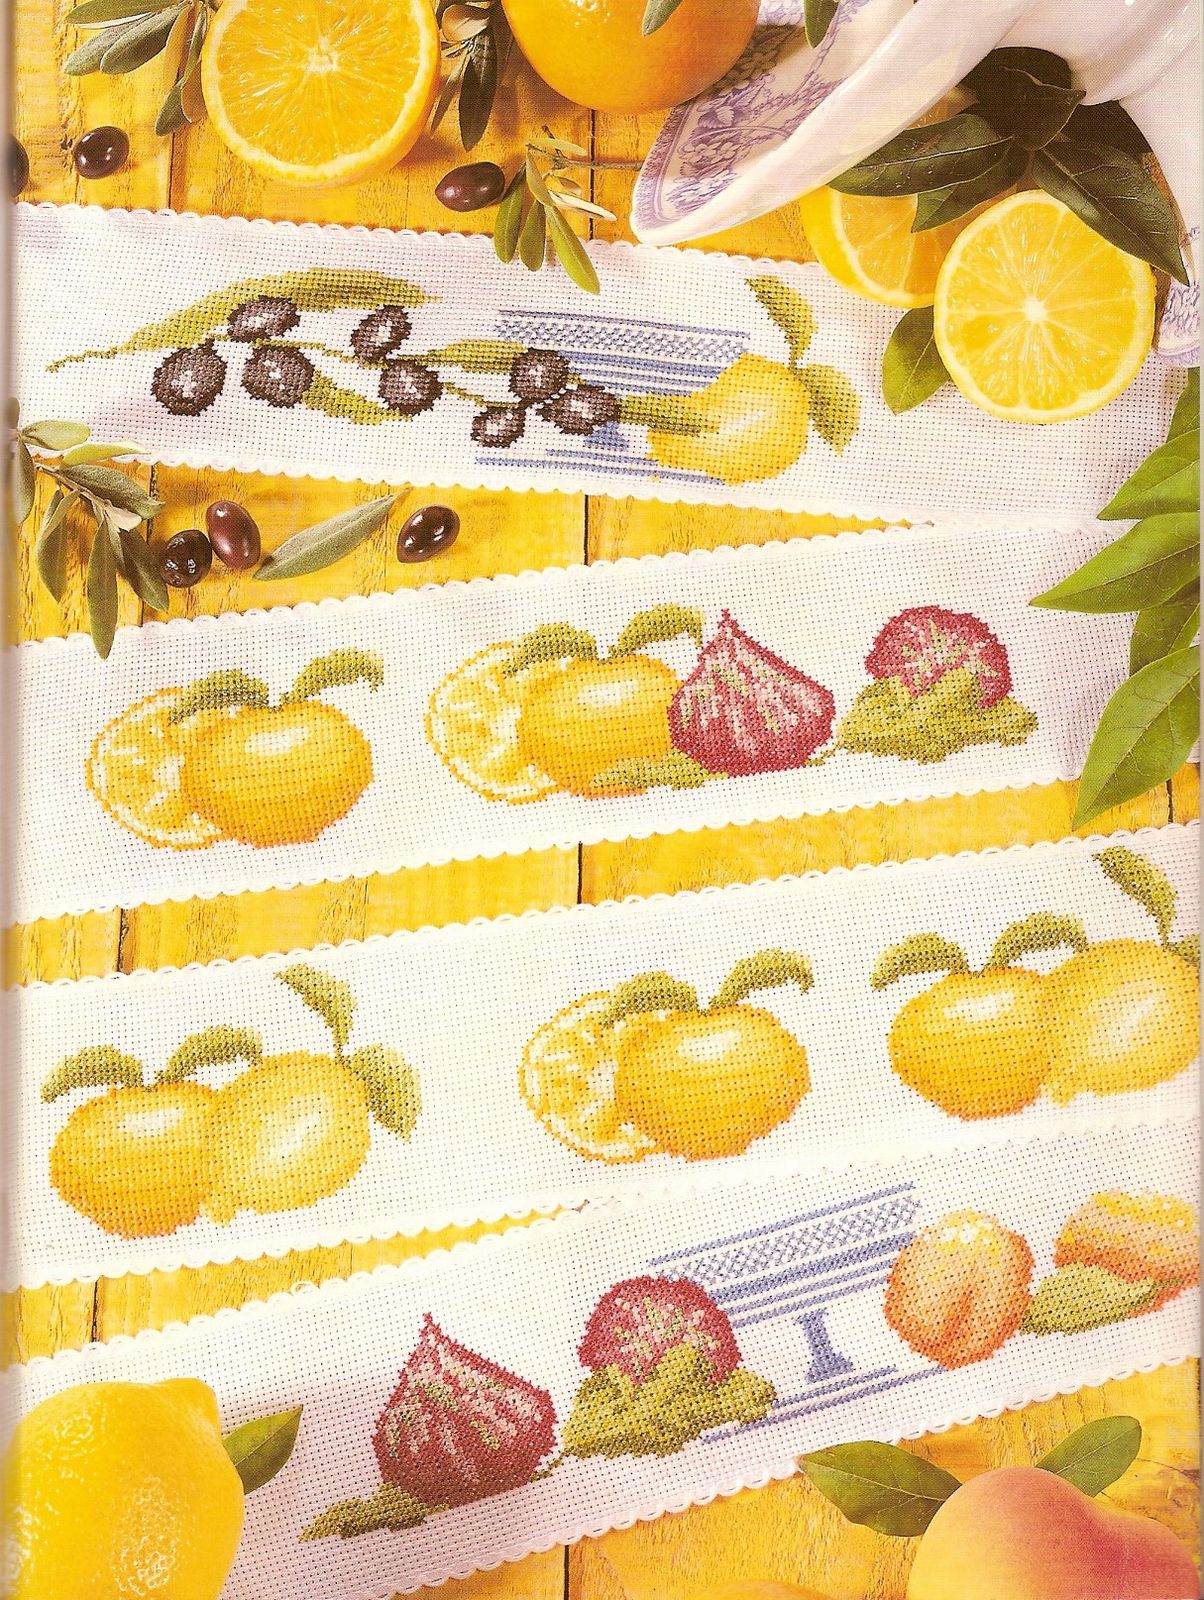 dishtowels cross stitch with figs and lemons (1)